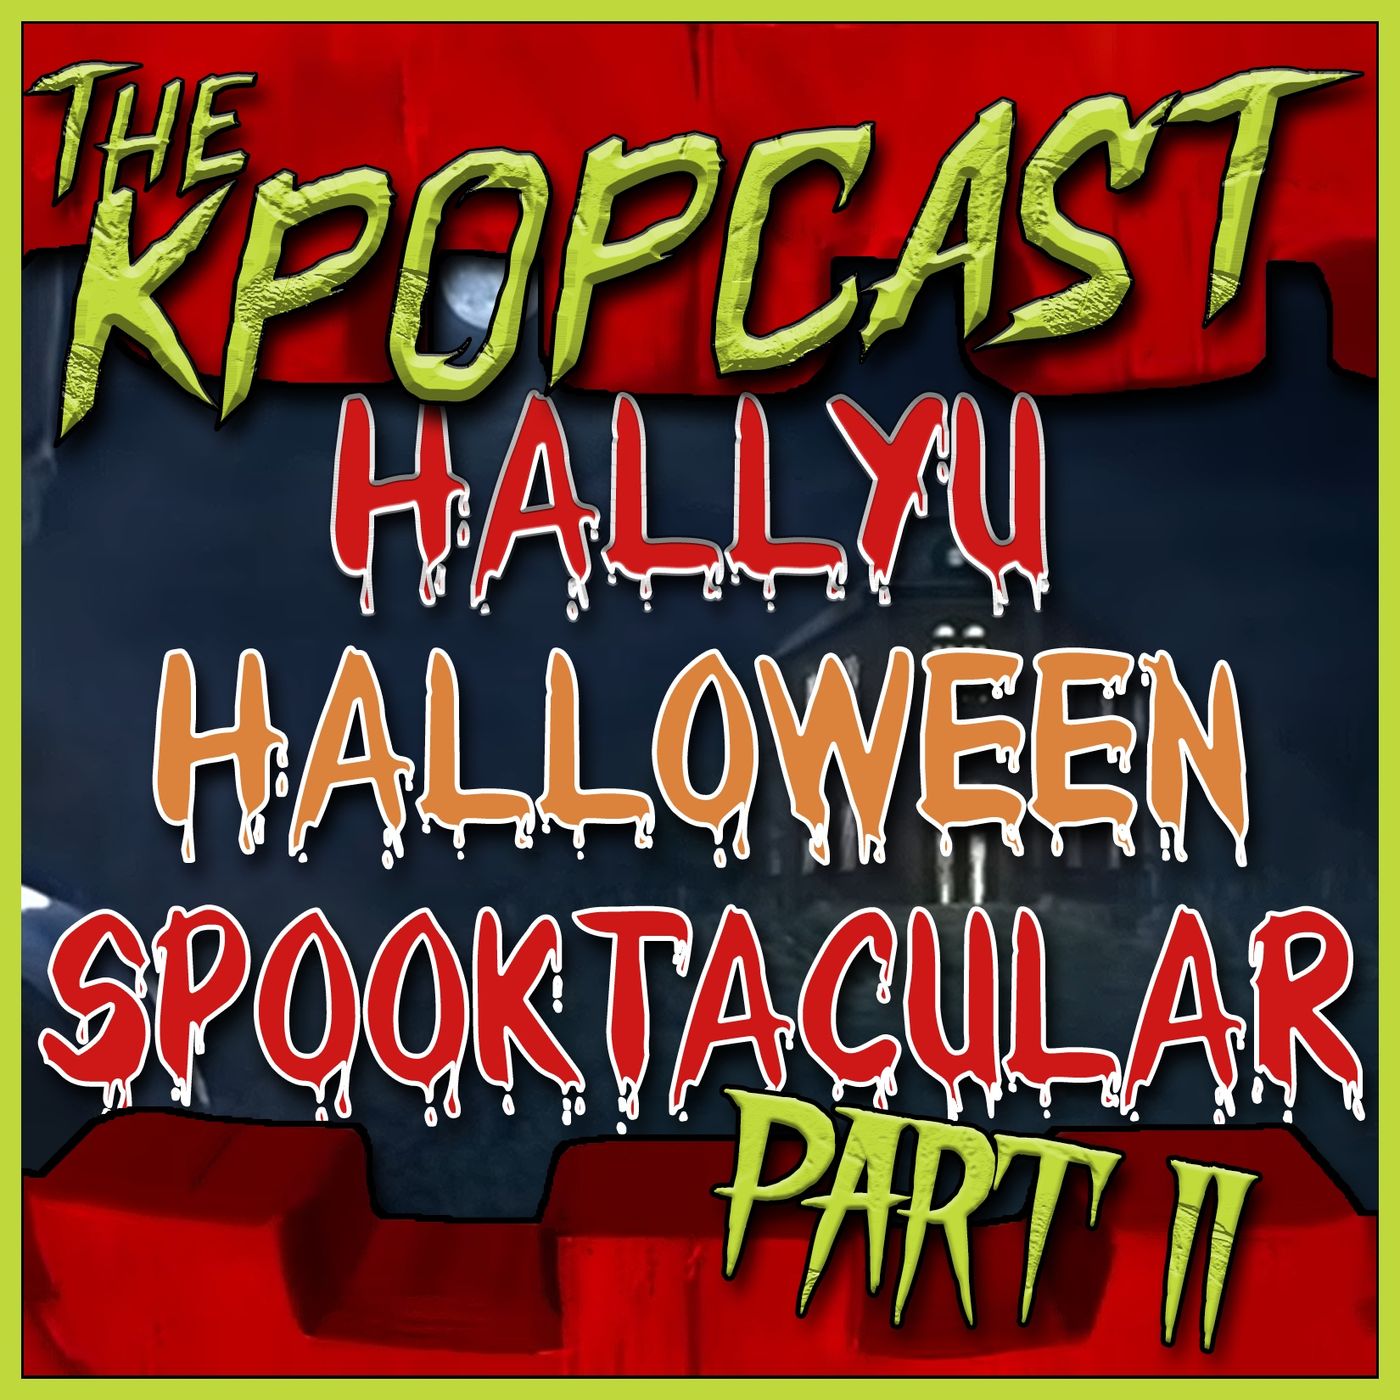 Kpopcast Hallyuween Spooktacular - PART II